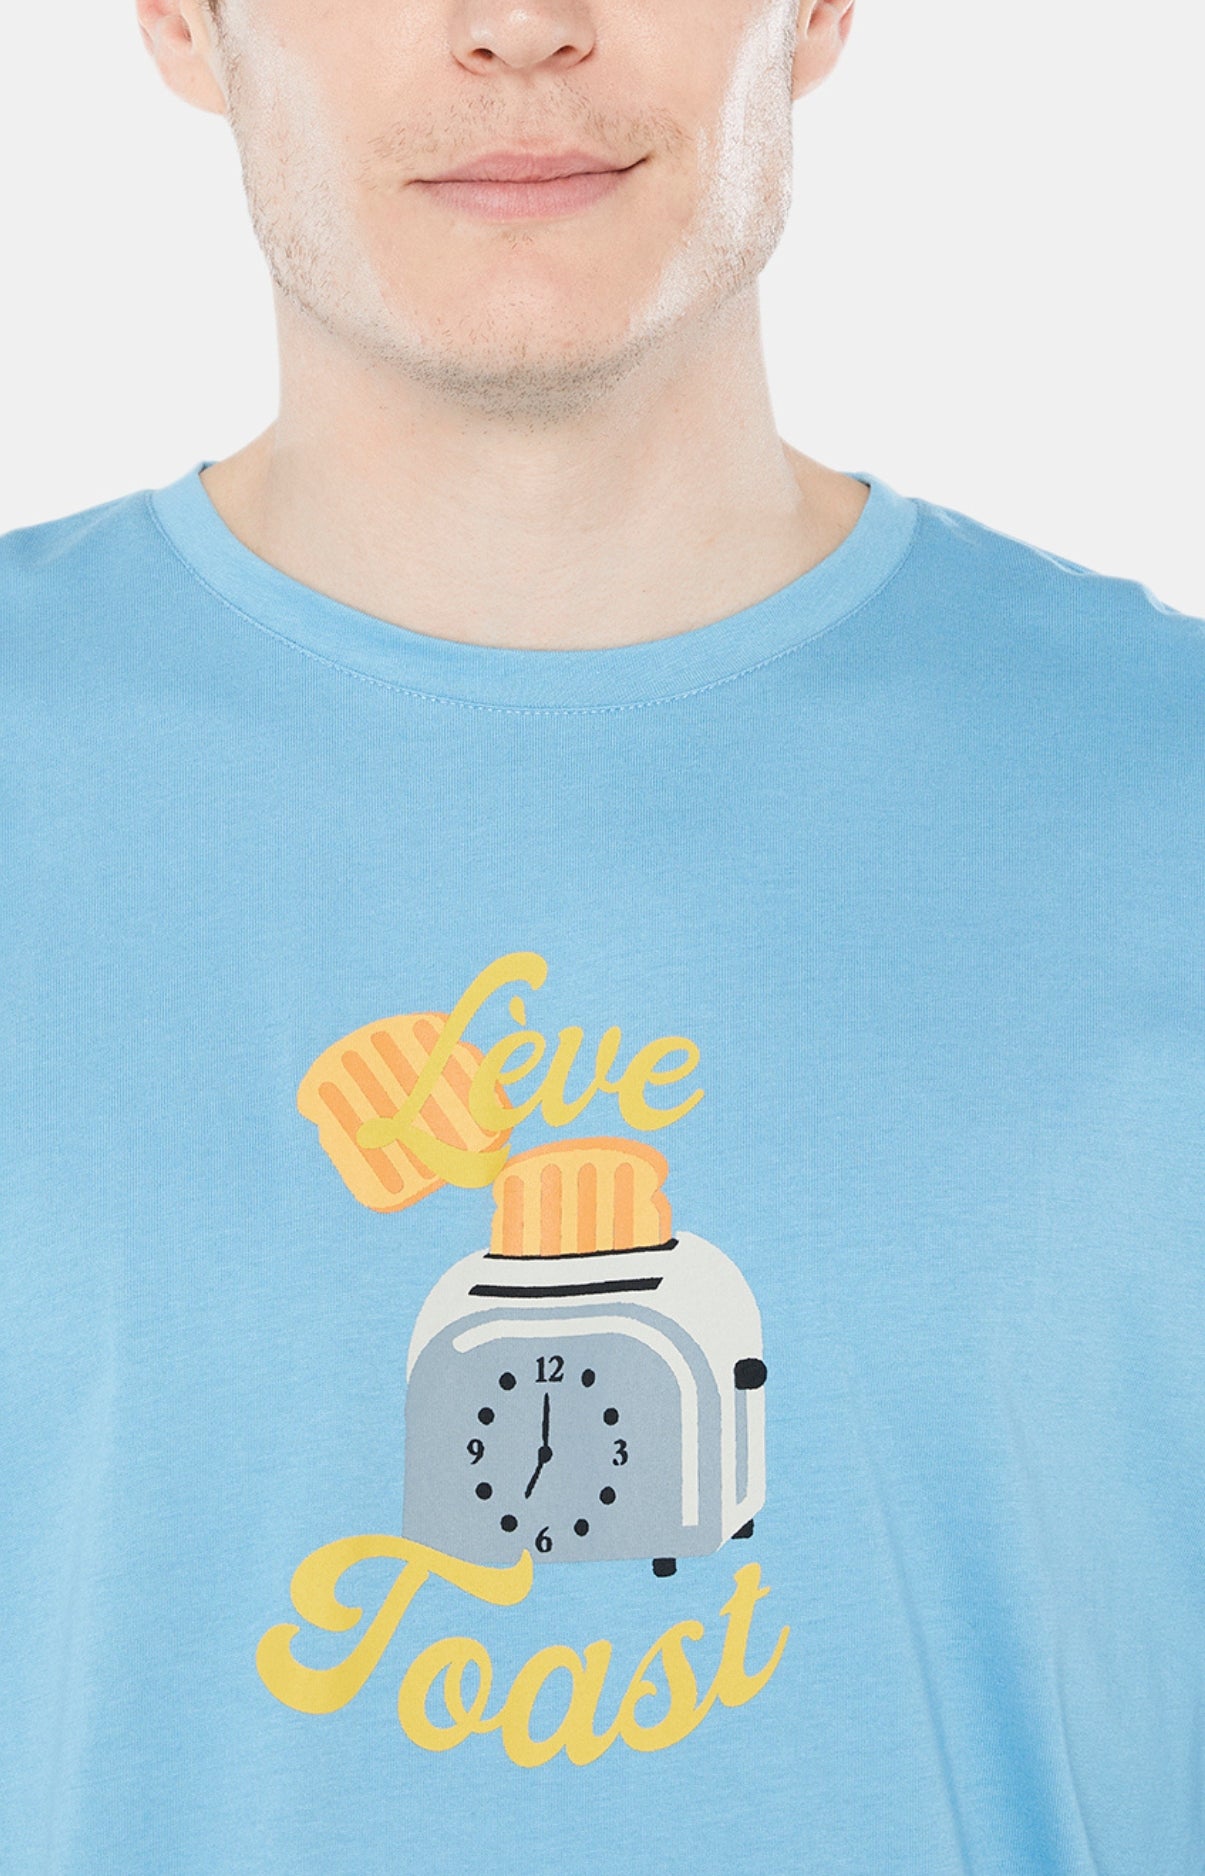 Maxi Tee-shirt - Toast